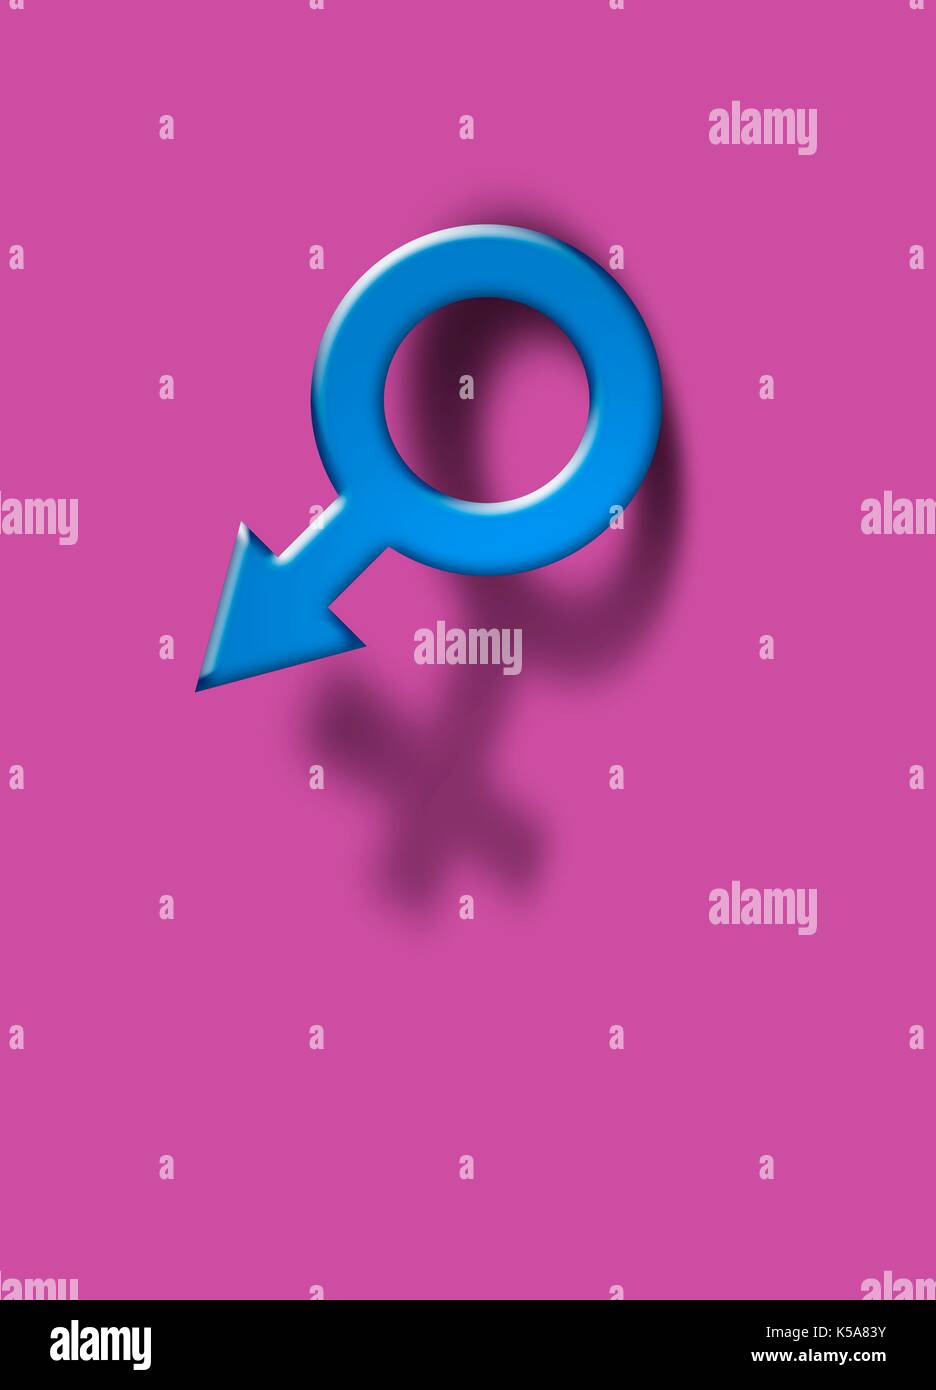 Male symbol with female symbol shadow, illustration. Stock Photo